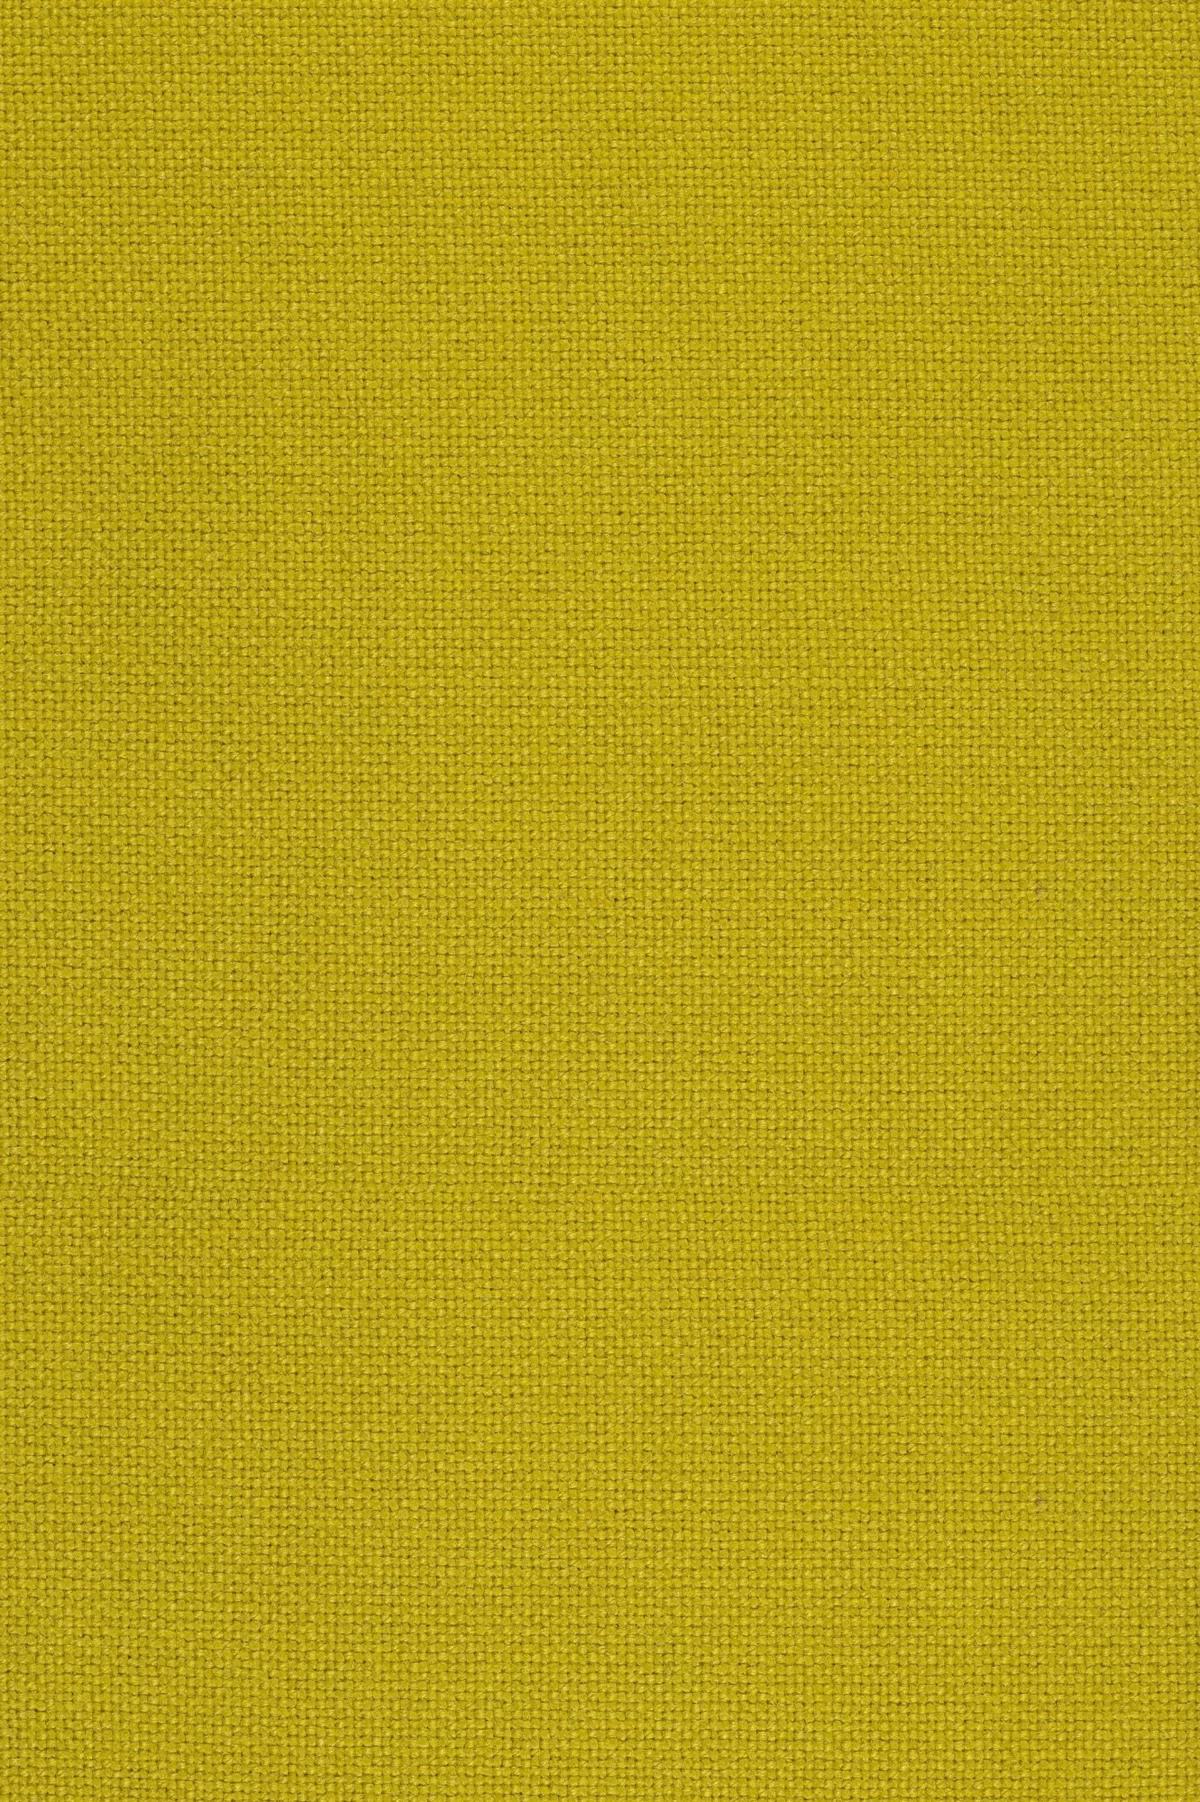 Fabric sample Hallingdal 65 457 yellow